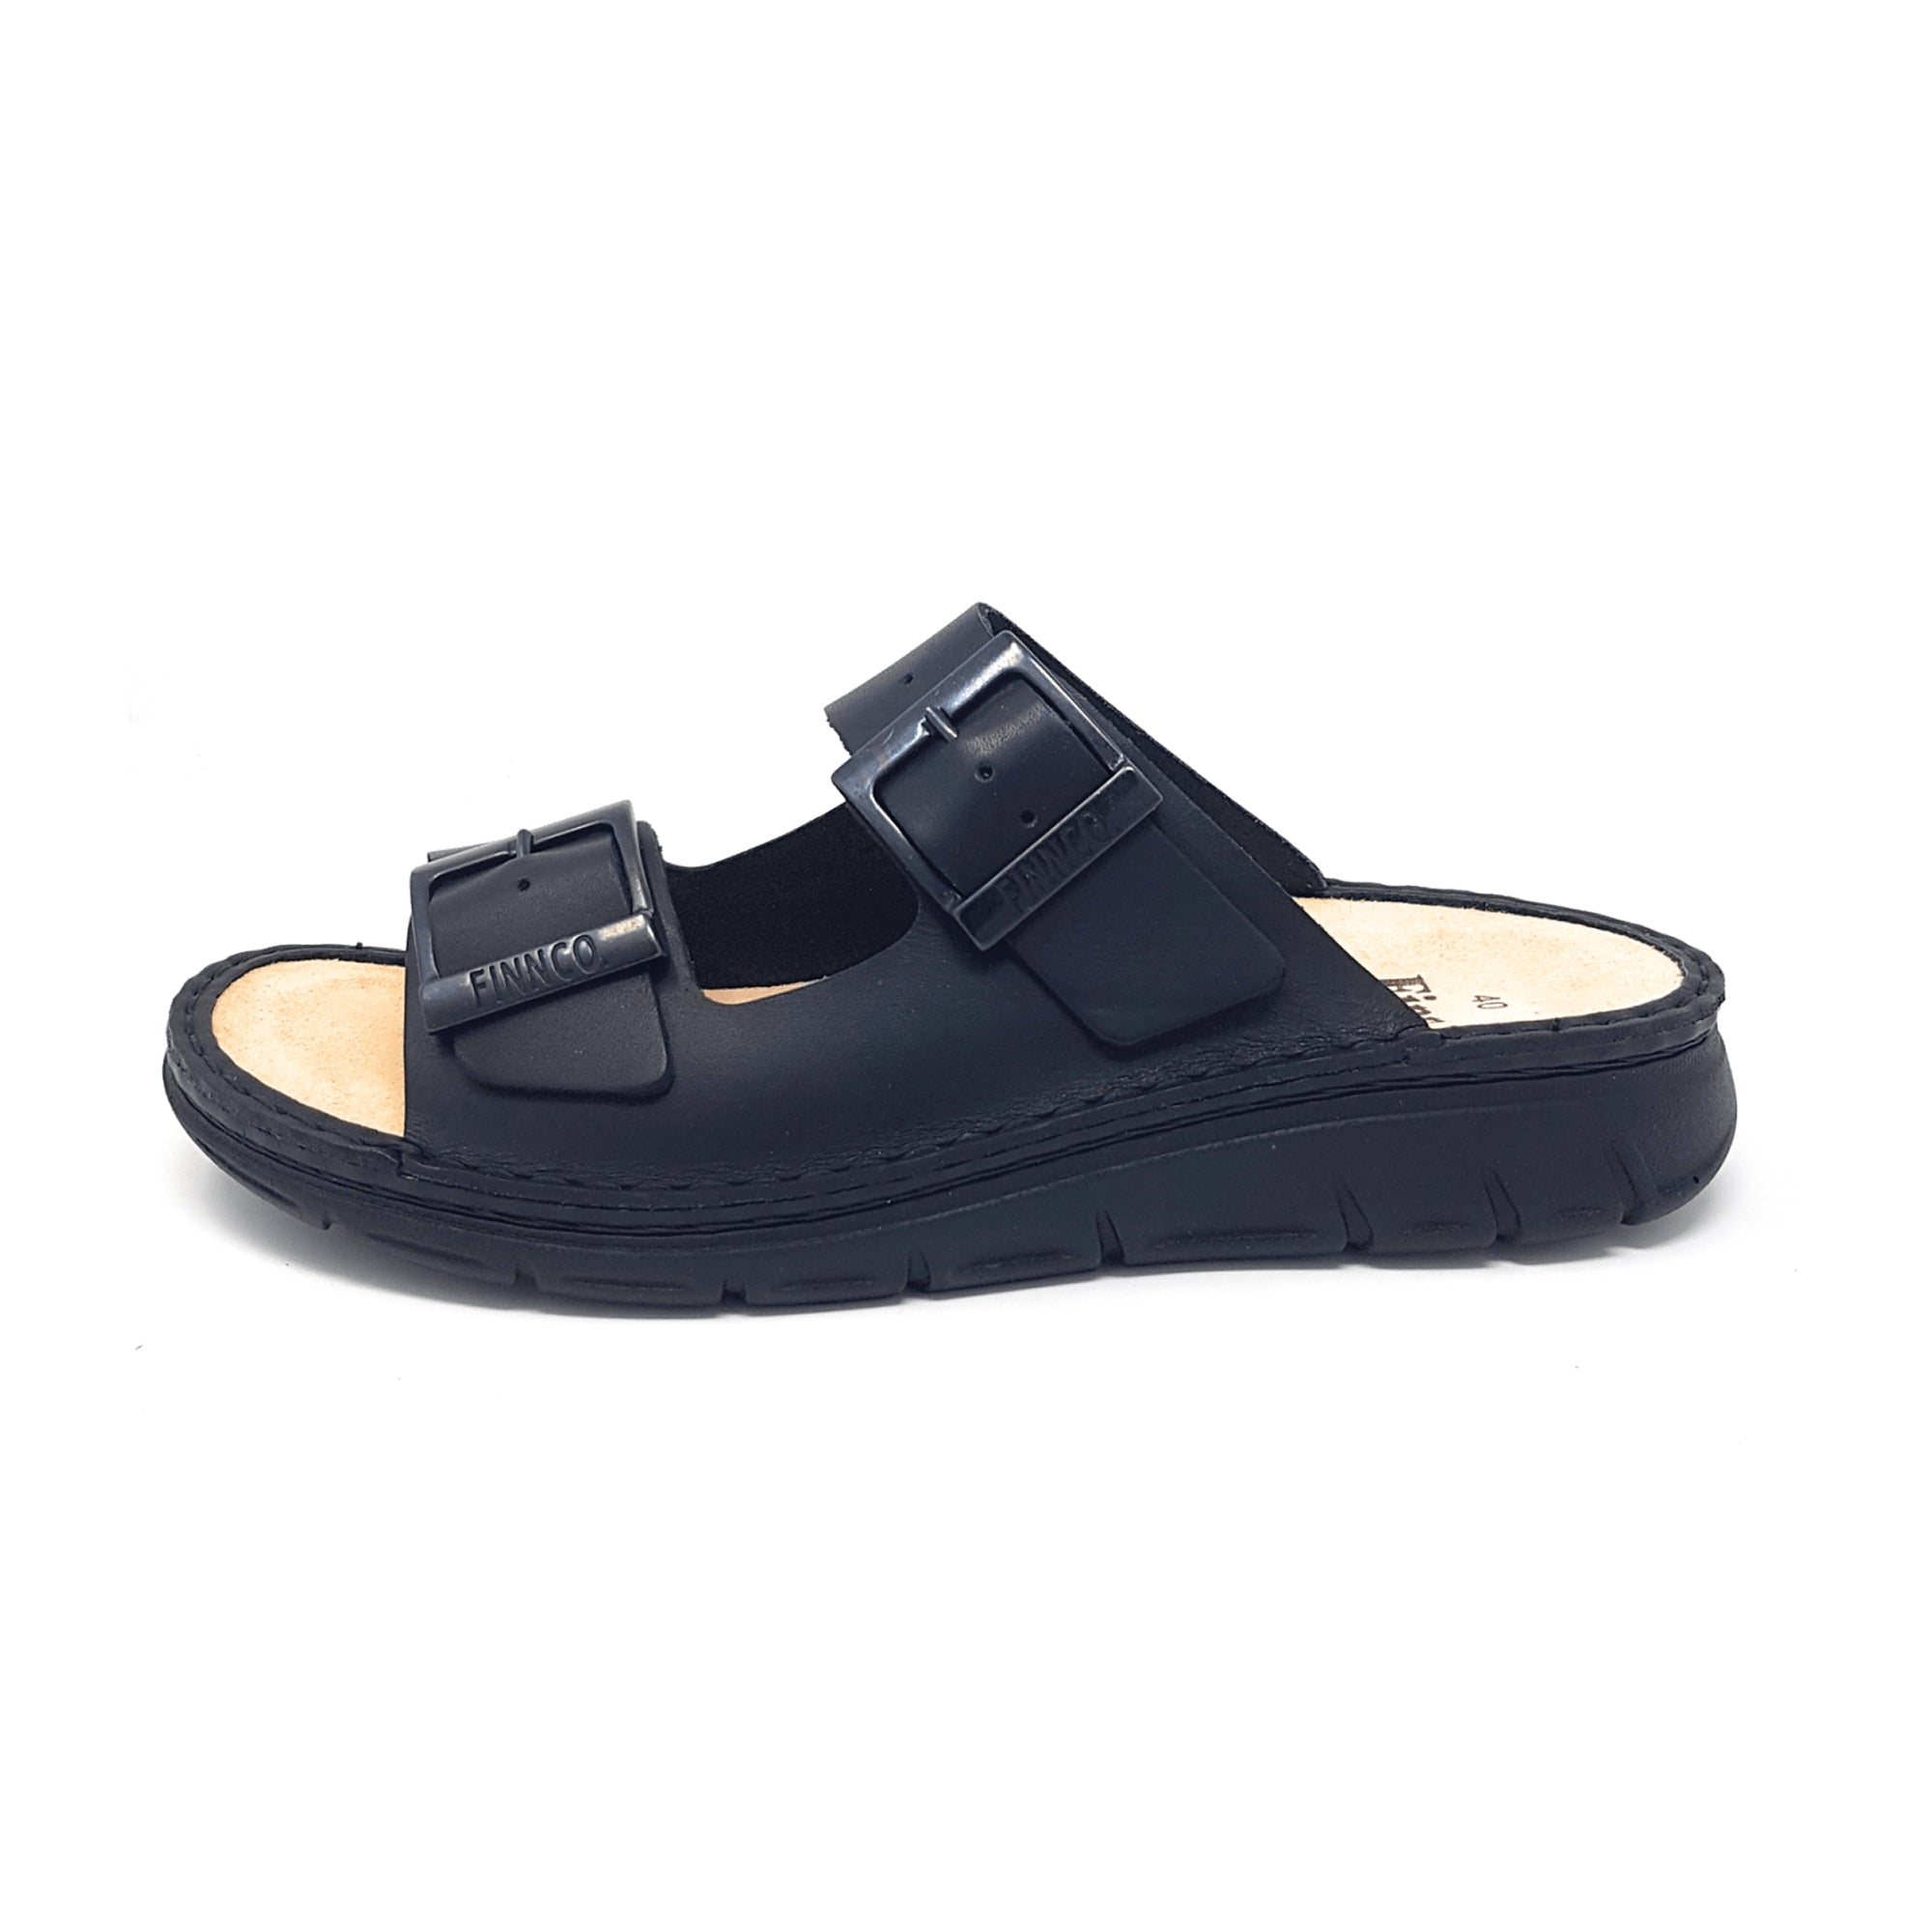 Finn Comfort Cayman-S Men's Black Sandals - Durable & Stylish